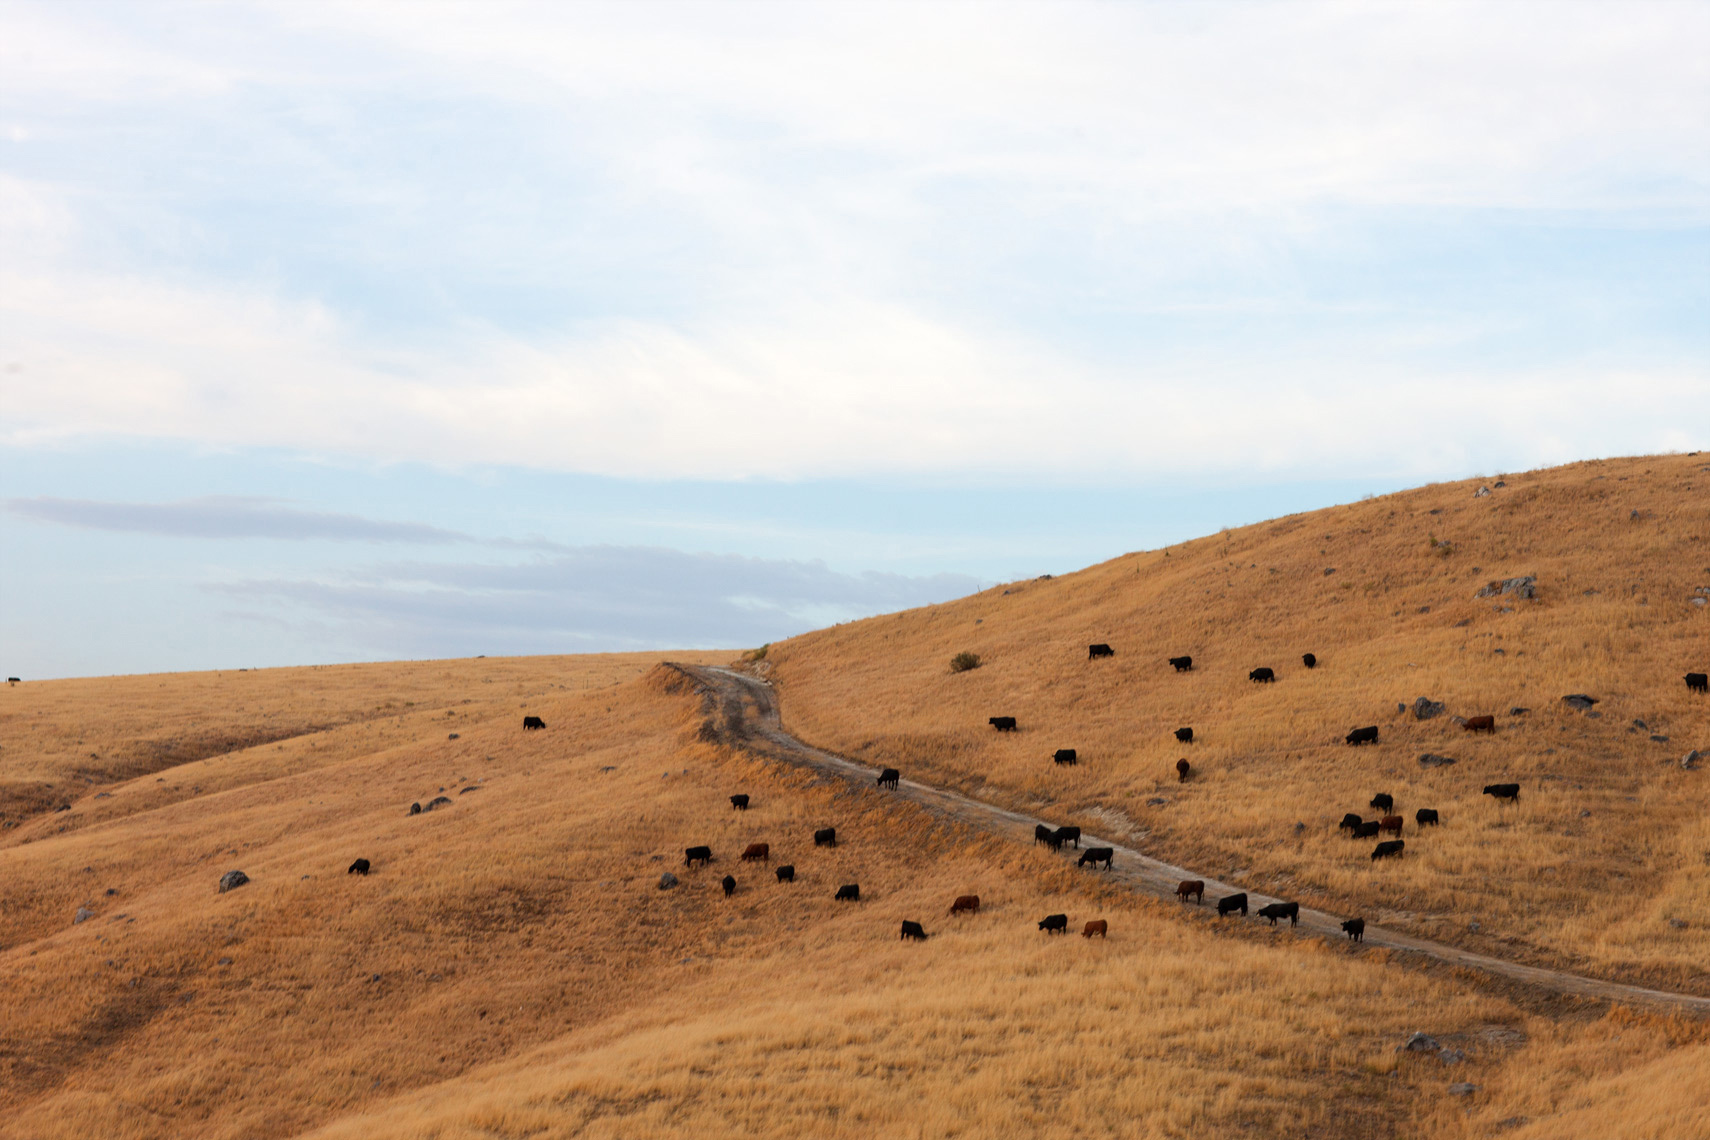 Roaming cattle in central California, by Mali Azima.